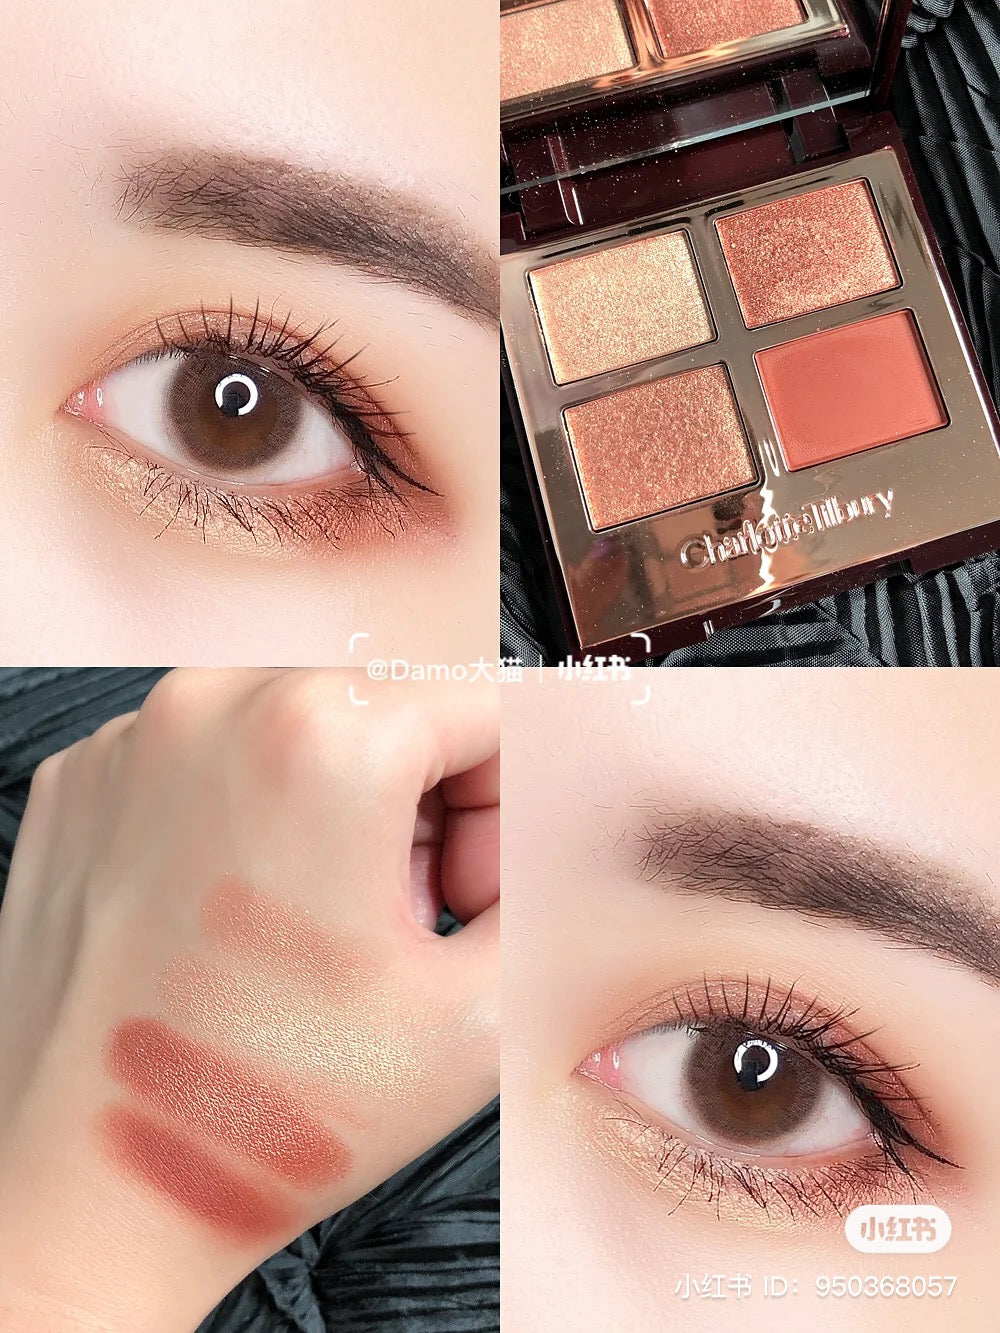 Charlotte Tilbury Luxury Eyeshadow palette #copper charge